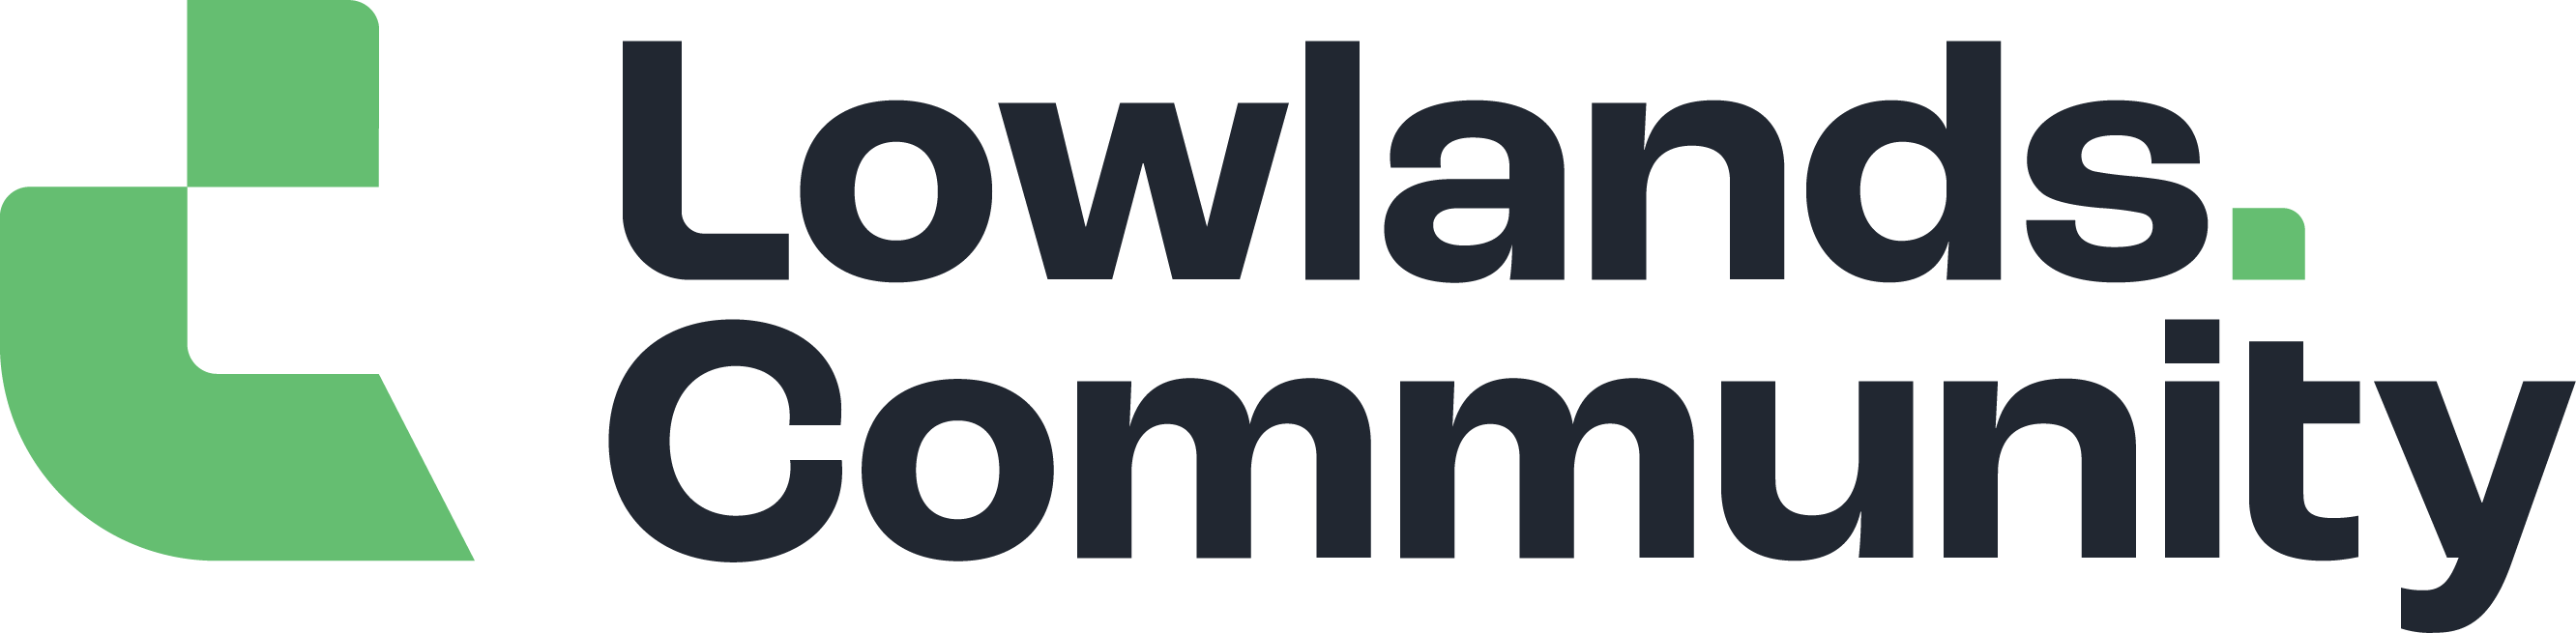 Lowlands-Community-logo-compacter.png